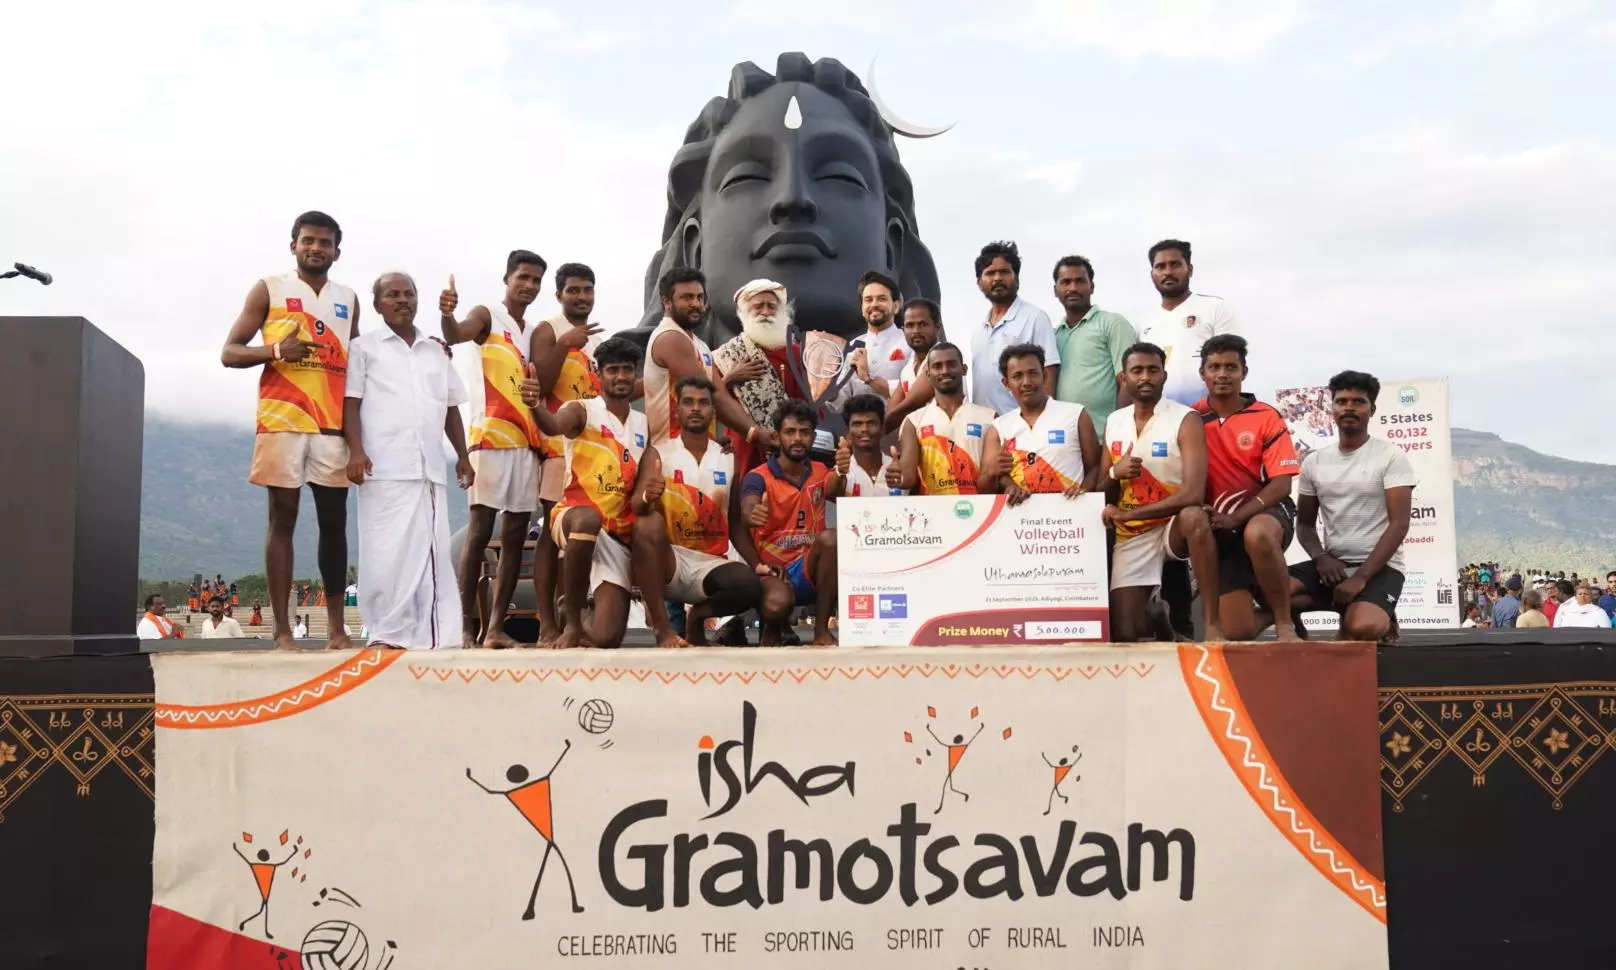 Grand finale of rural sports festival Isha Gramotsavam held in Coimbatore